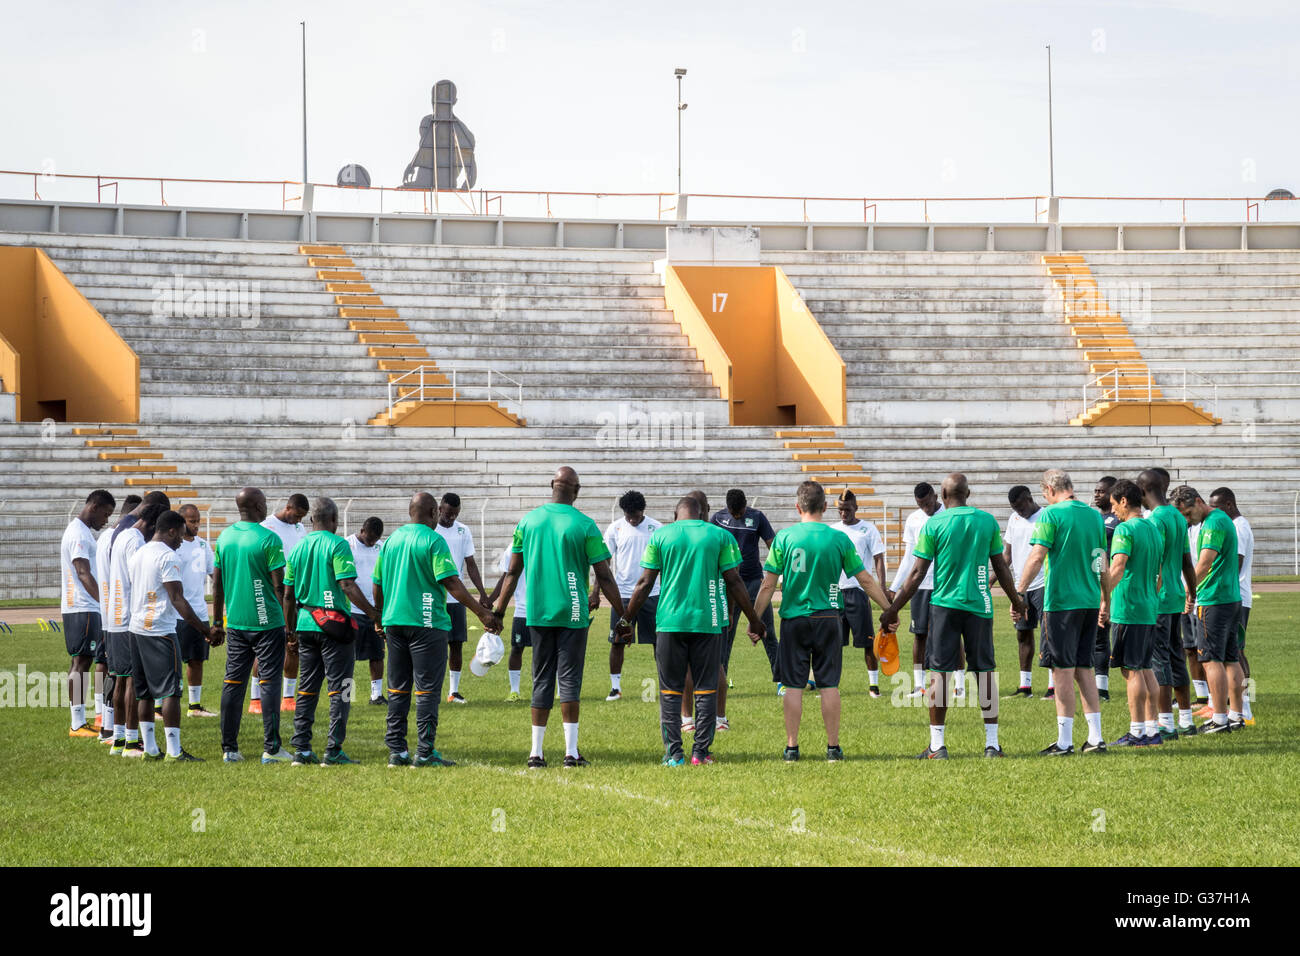 Ivory Coast's famous soccer stadiums' attire